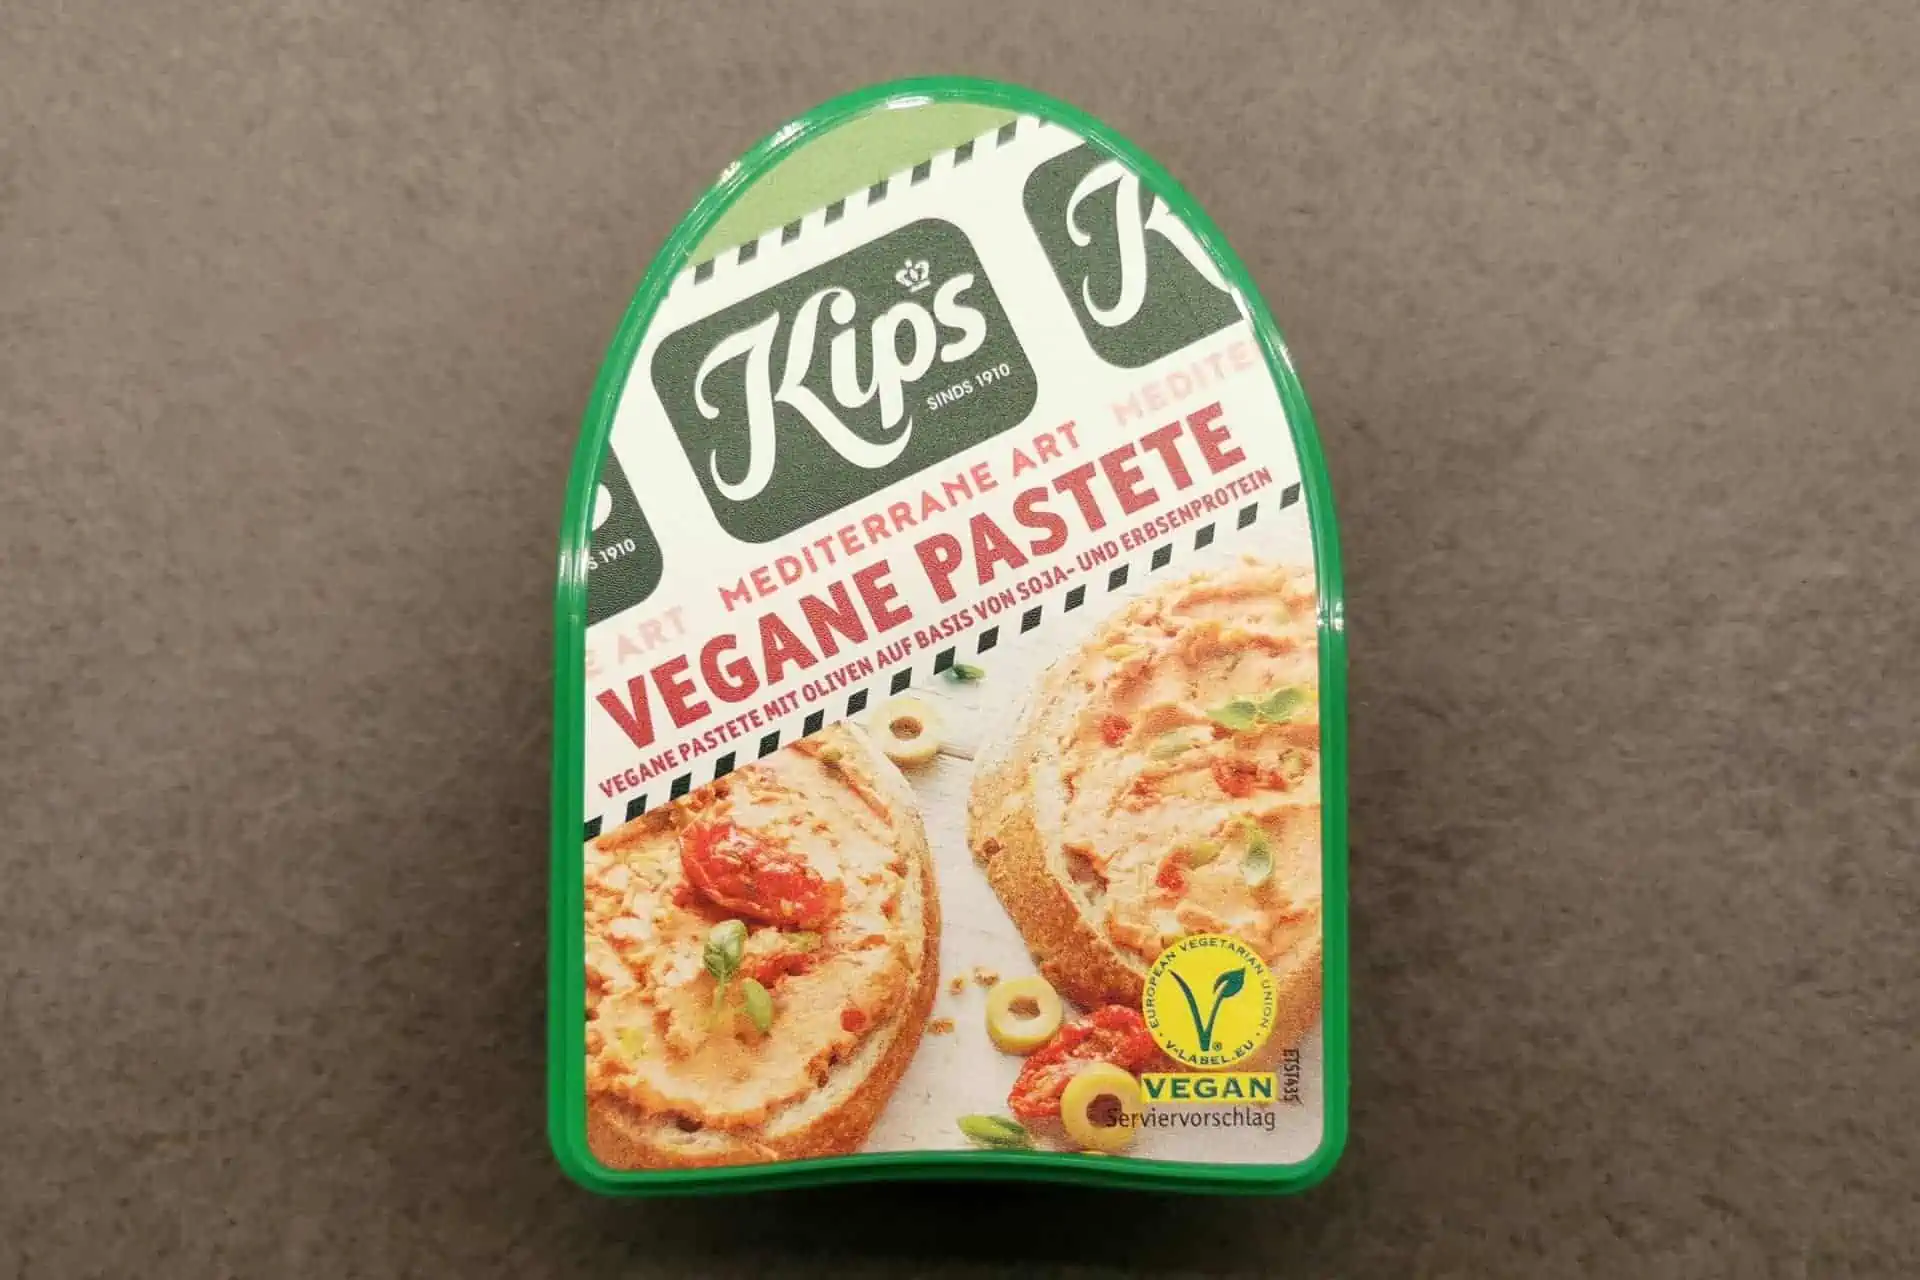 Kips - Vegane Pastete mediterrane Art